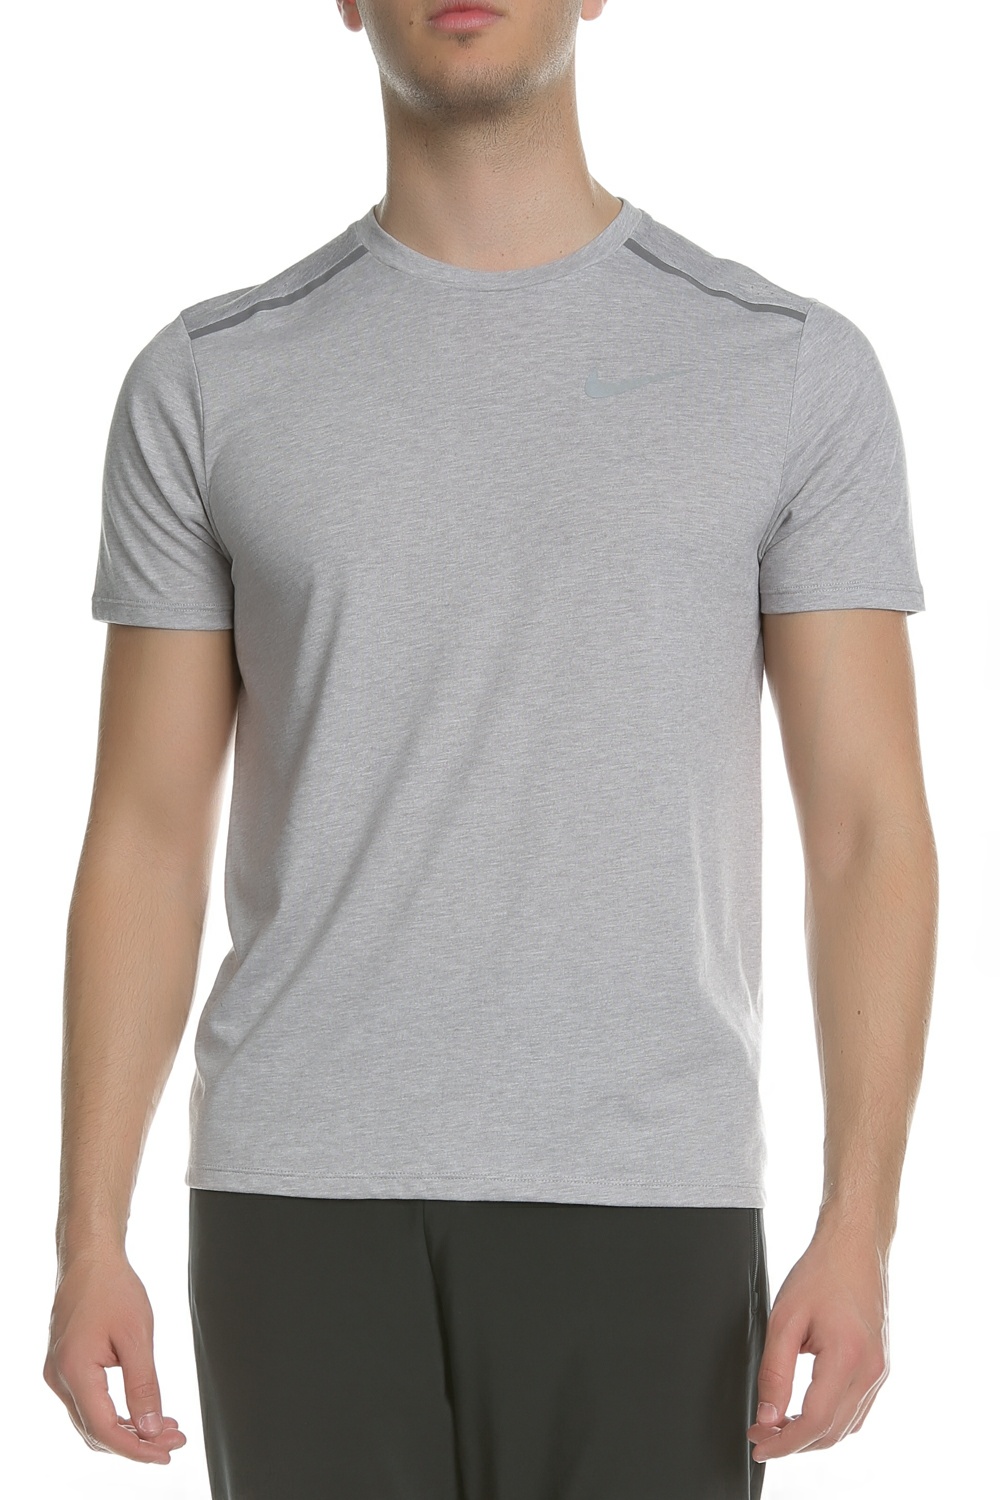 NIKE - Ανδρική κοντομάνικη μπλούζα Nike TAILWIND γκρι Ανδρικά/Ρούχα/Αθλητικά/T-shirt